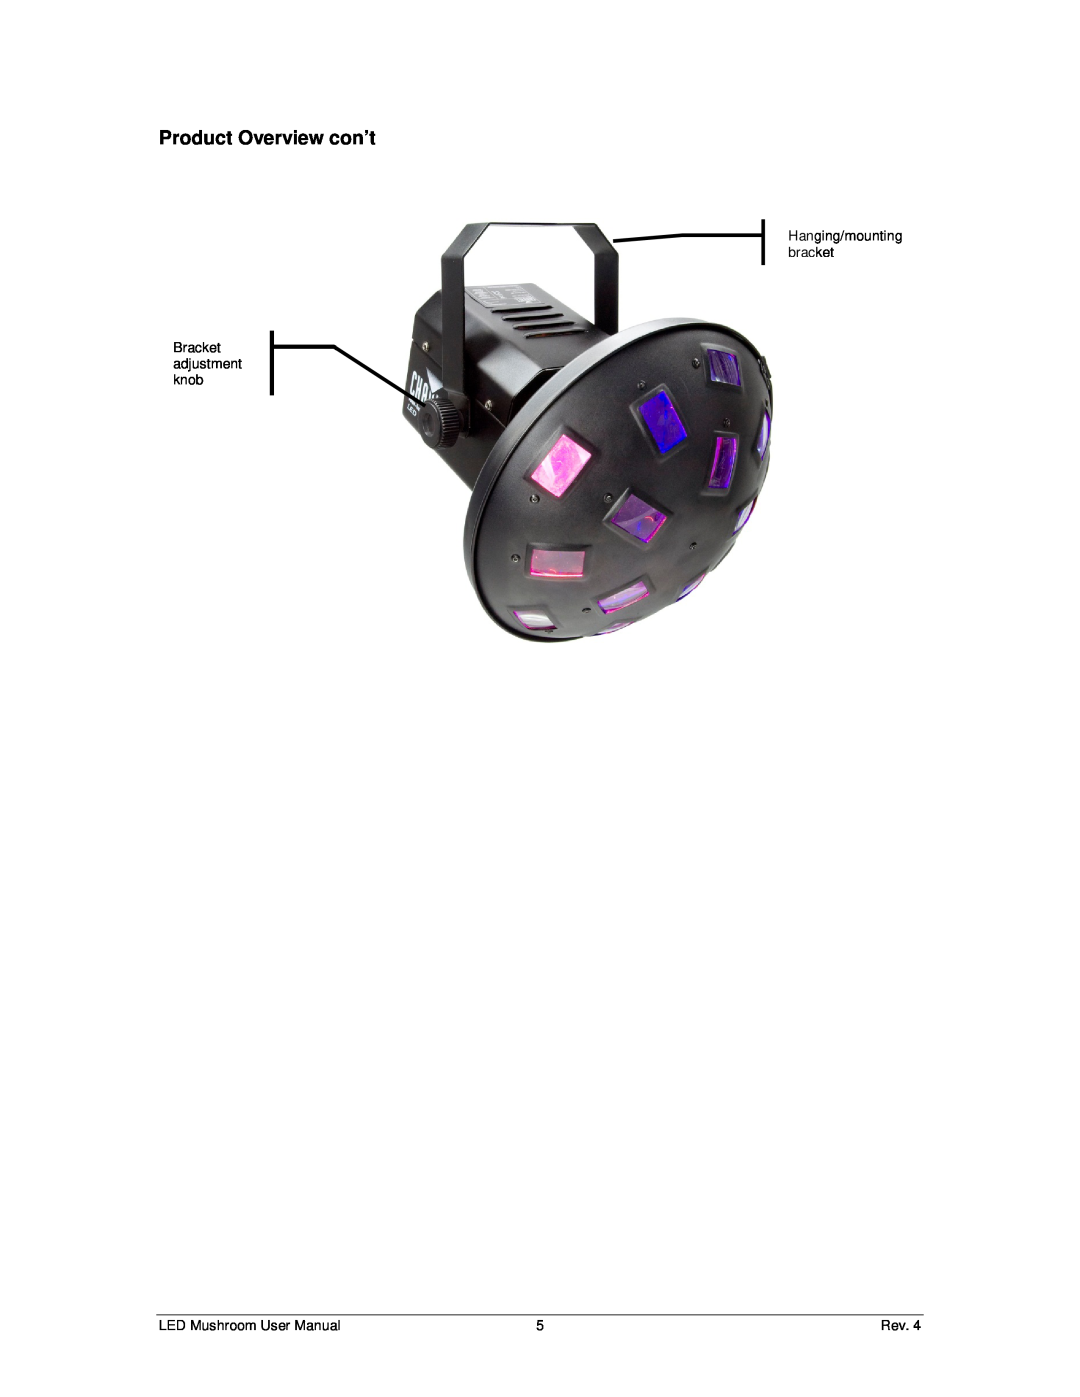 Chauvet DMX512 user manual Product Overview con’t, Hanging/mounting bracket Bracket adjustment knob, Rev 